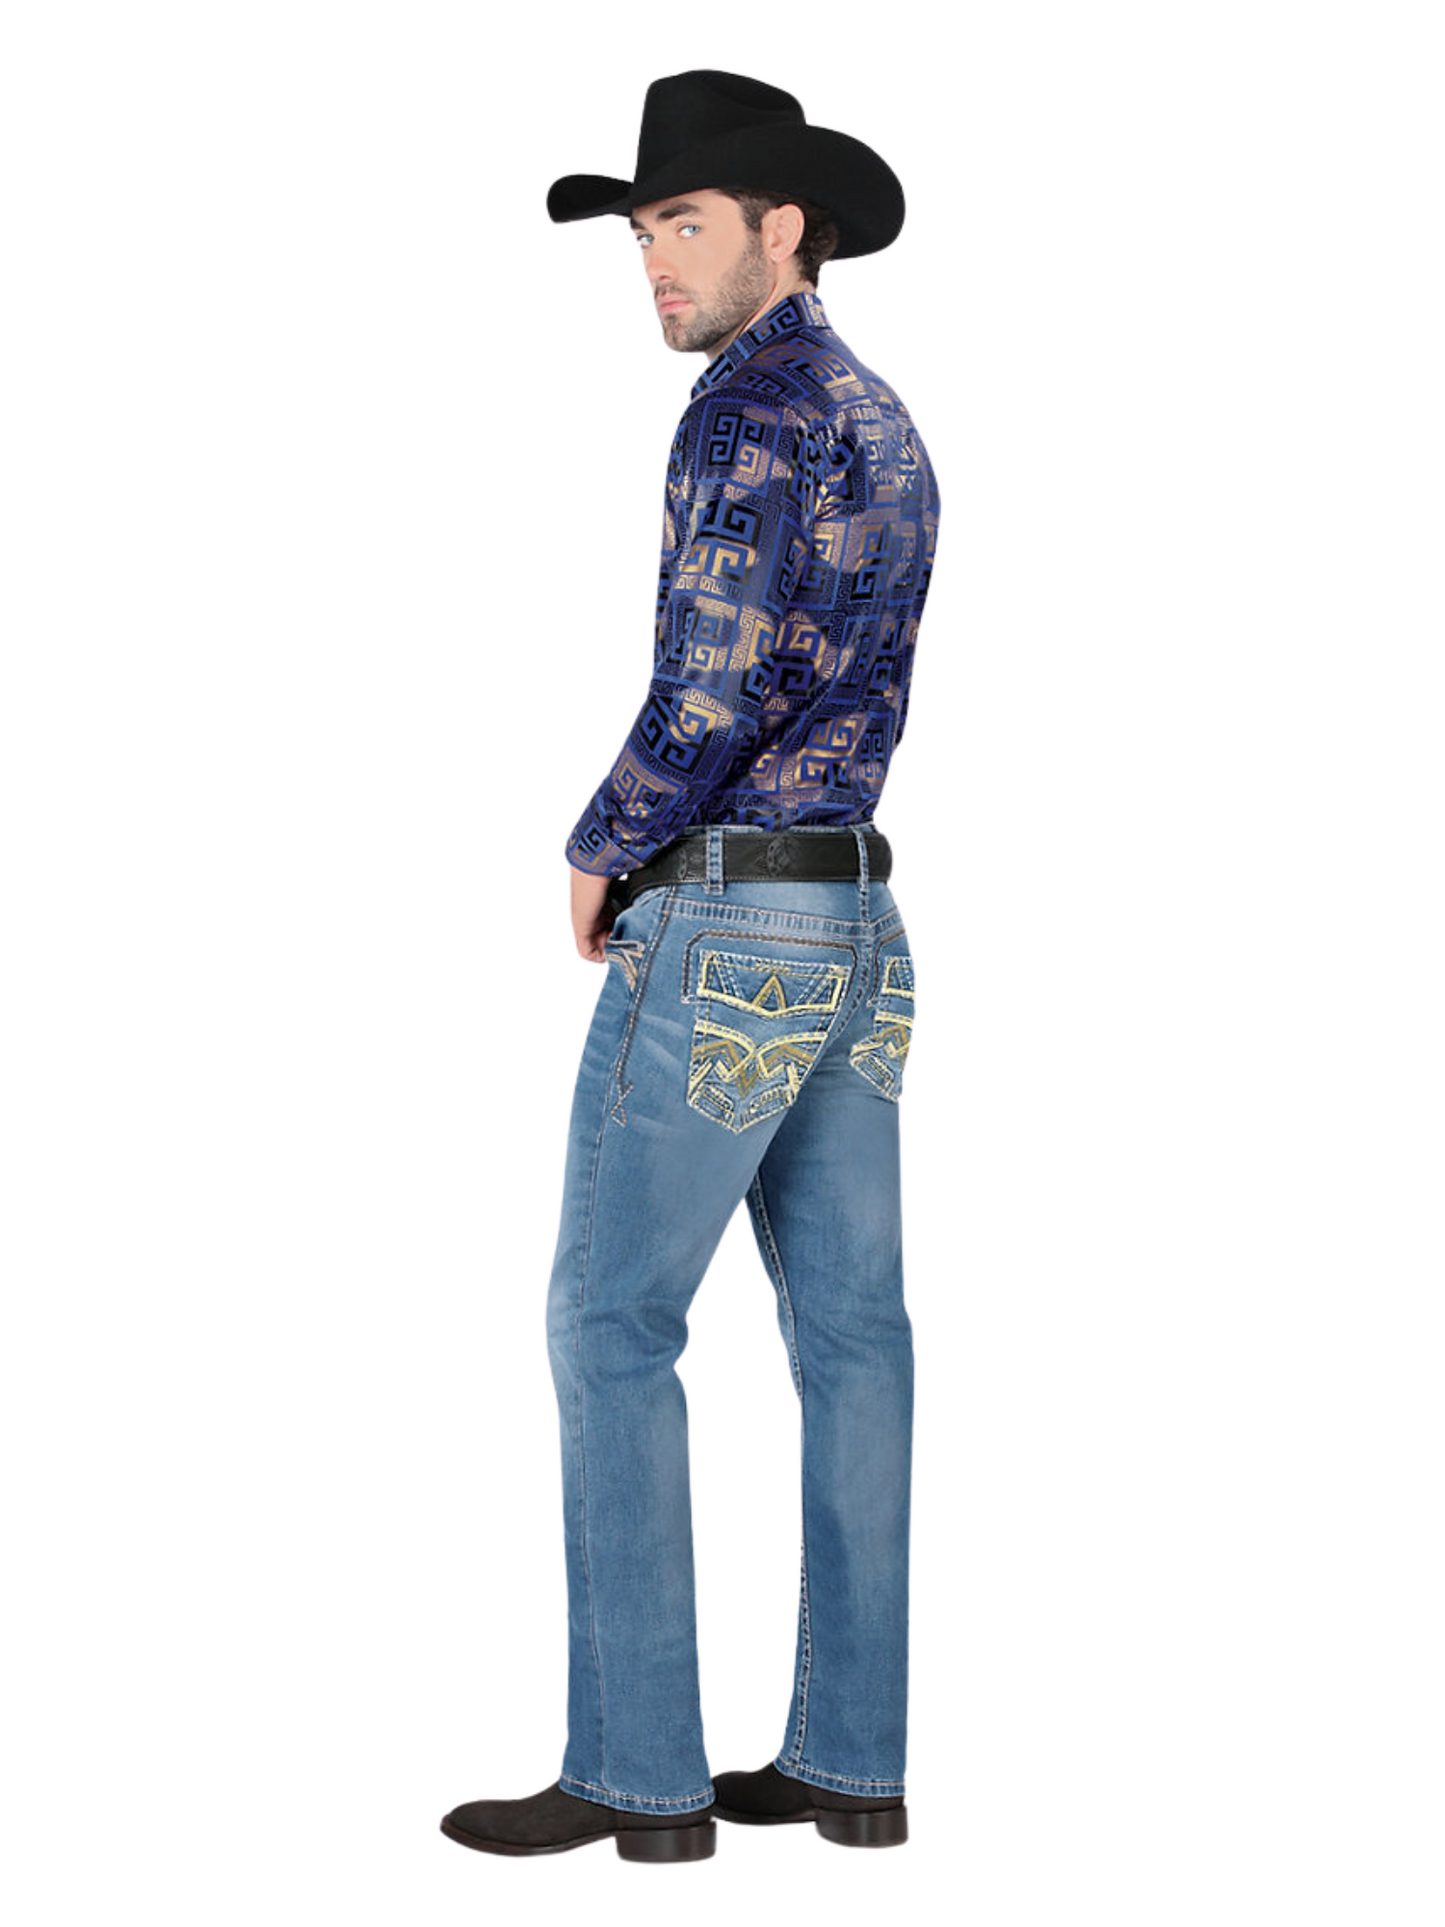 Stretch Denim Jeans for Men 'Montero' - ID: 4609 Denim Jeans Montero